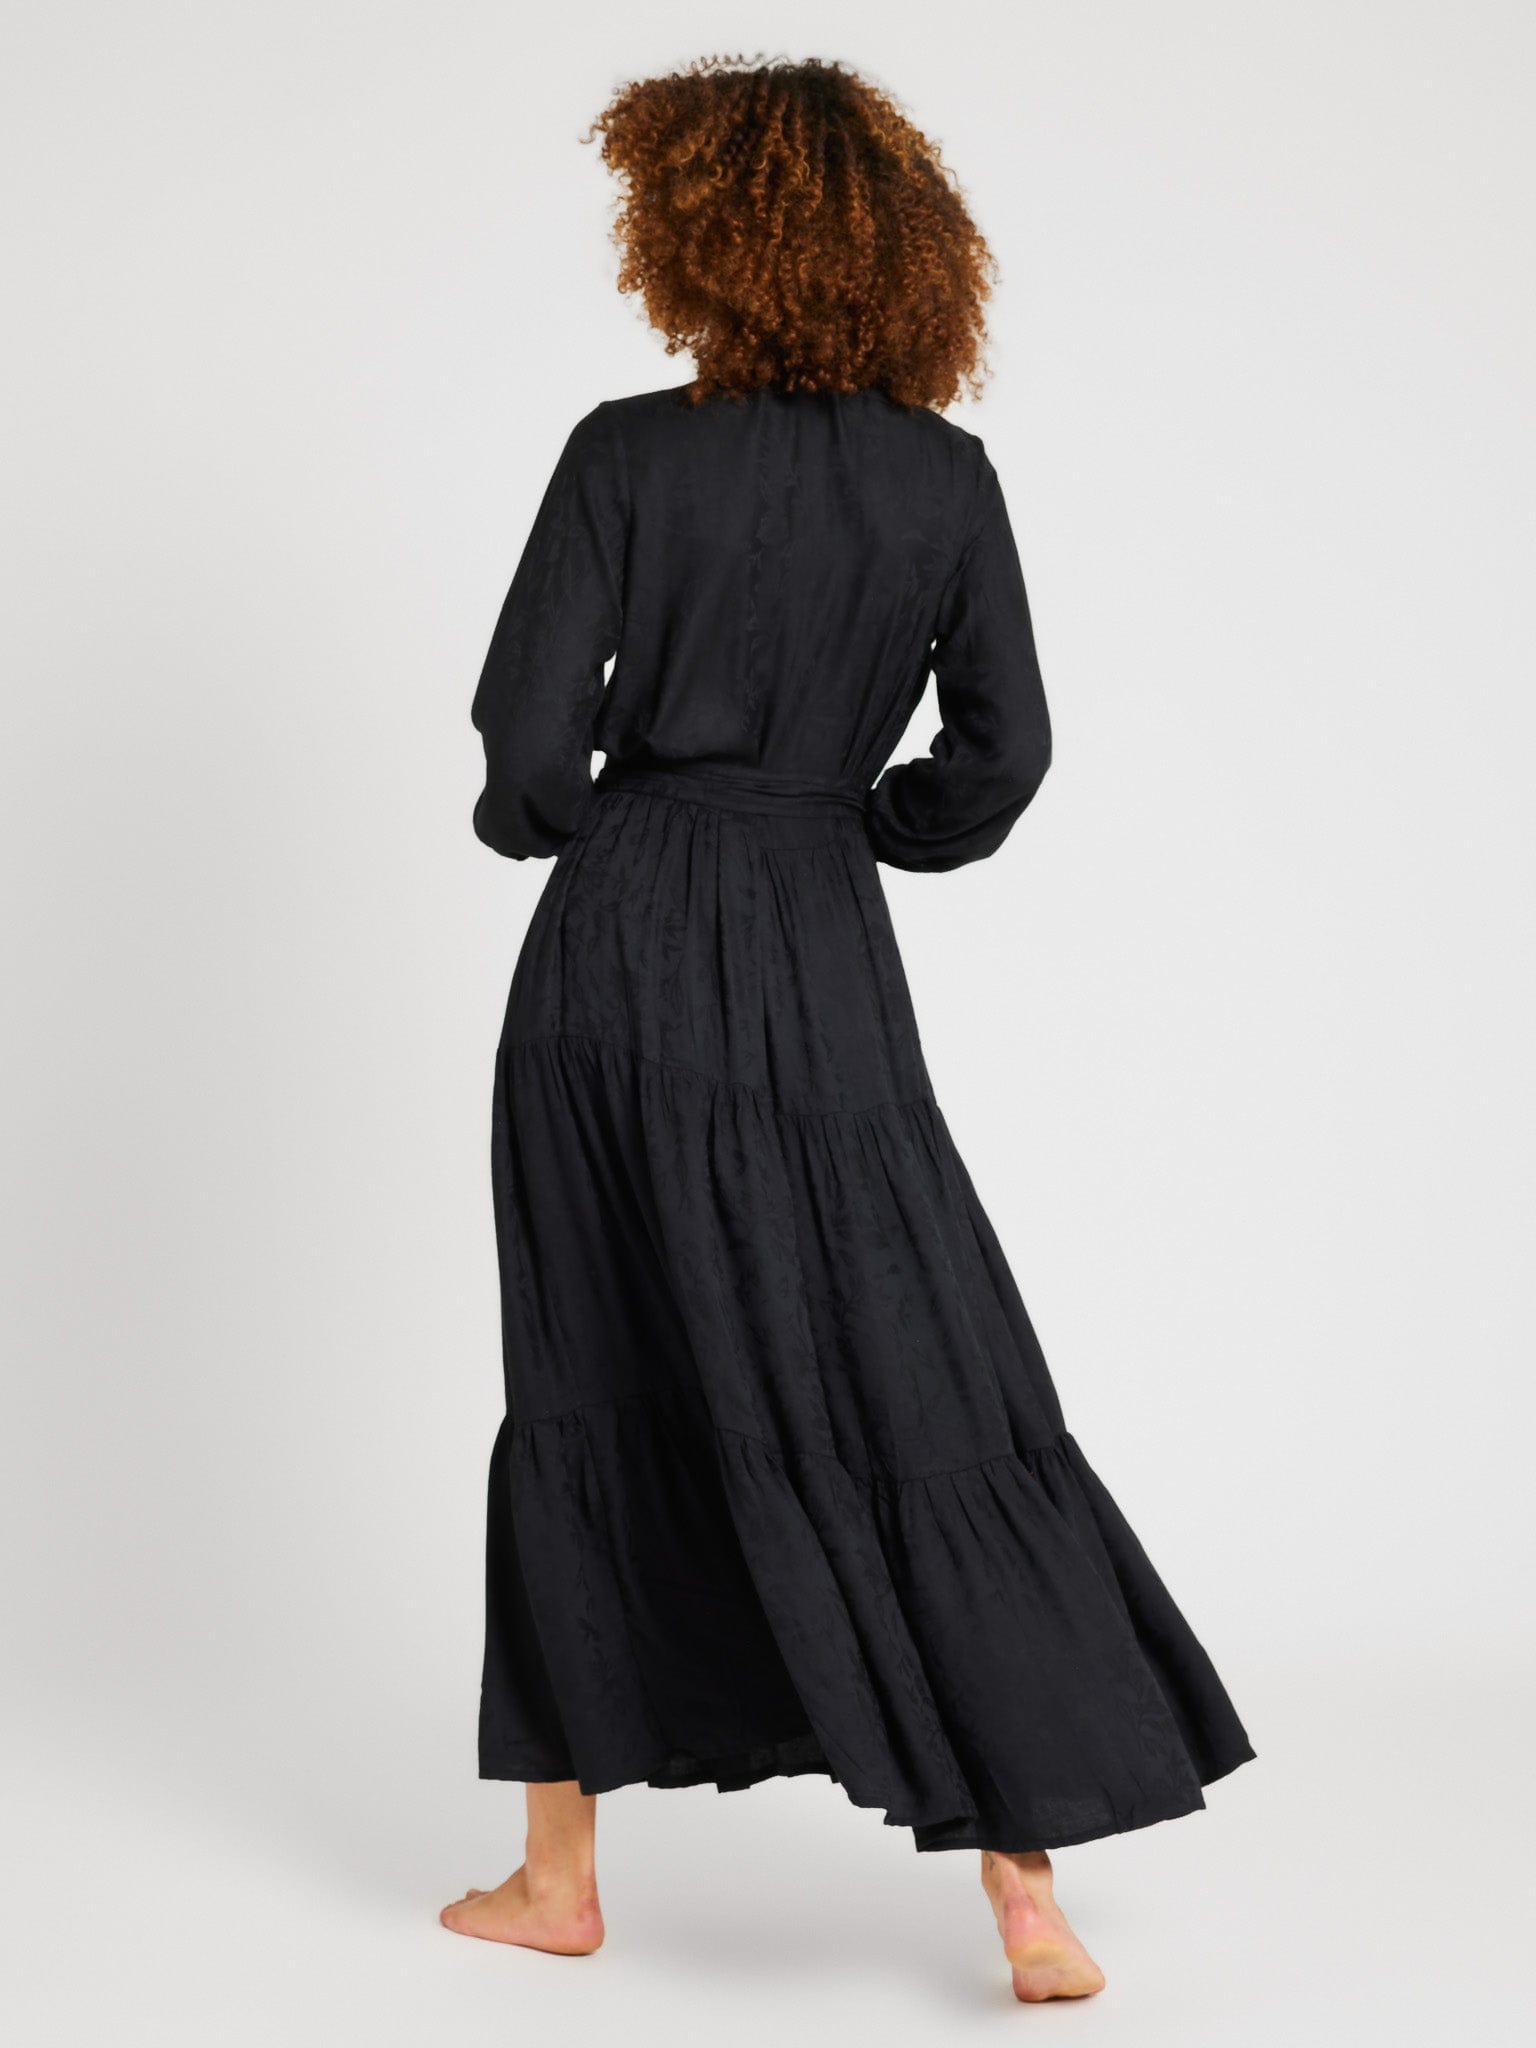 MILLE Clothing Valentina Dress in Black Jacquard